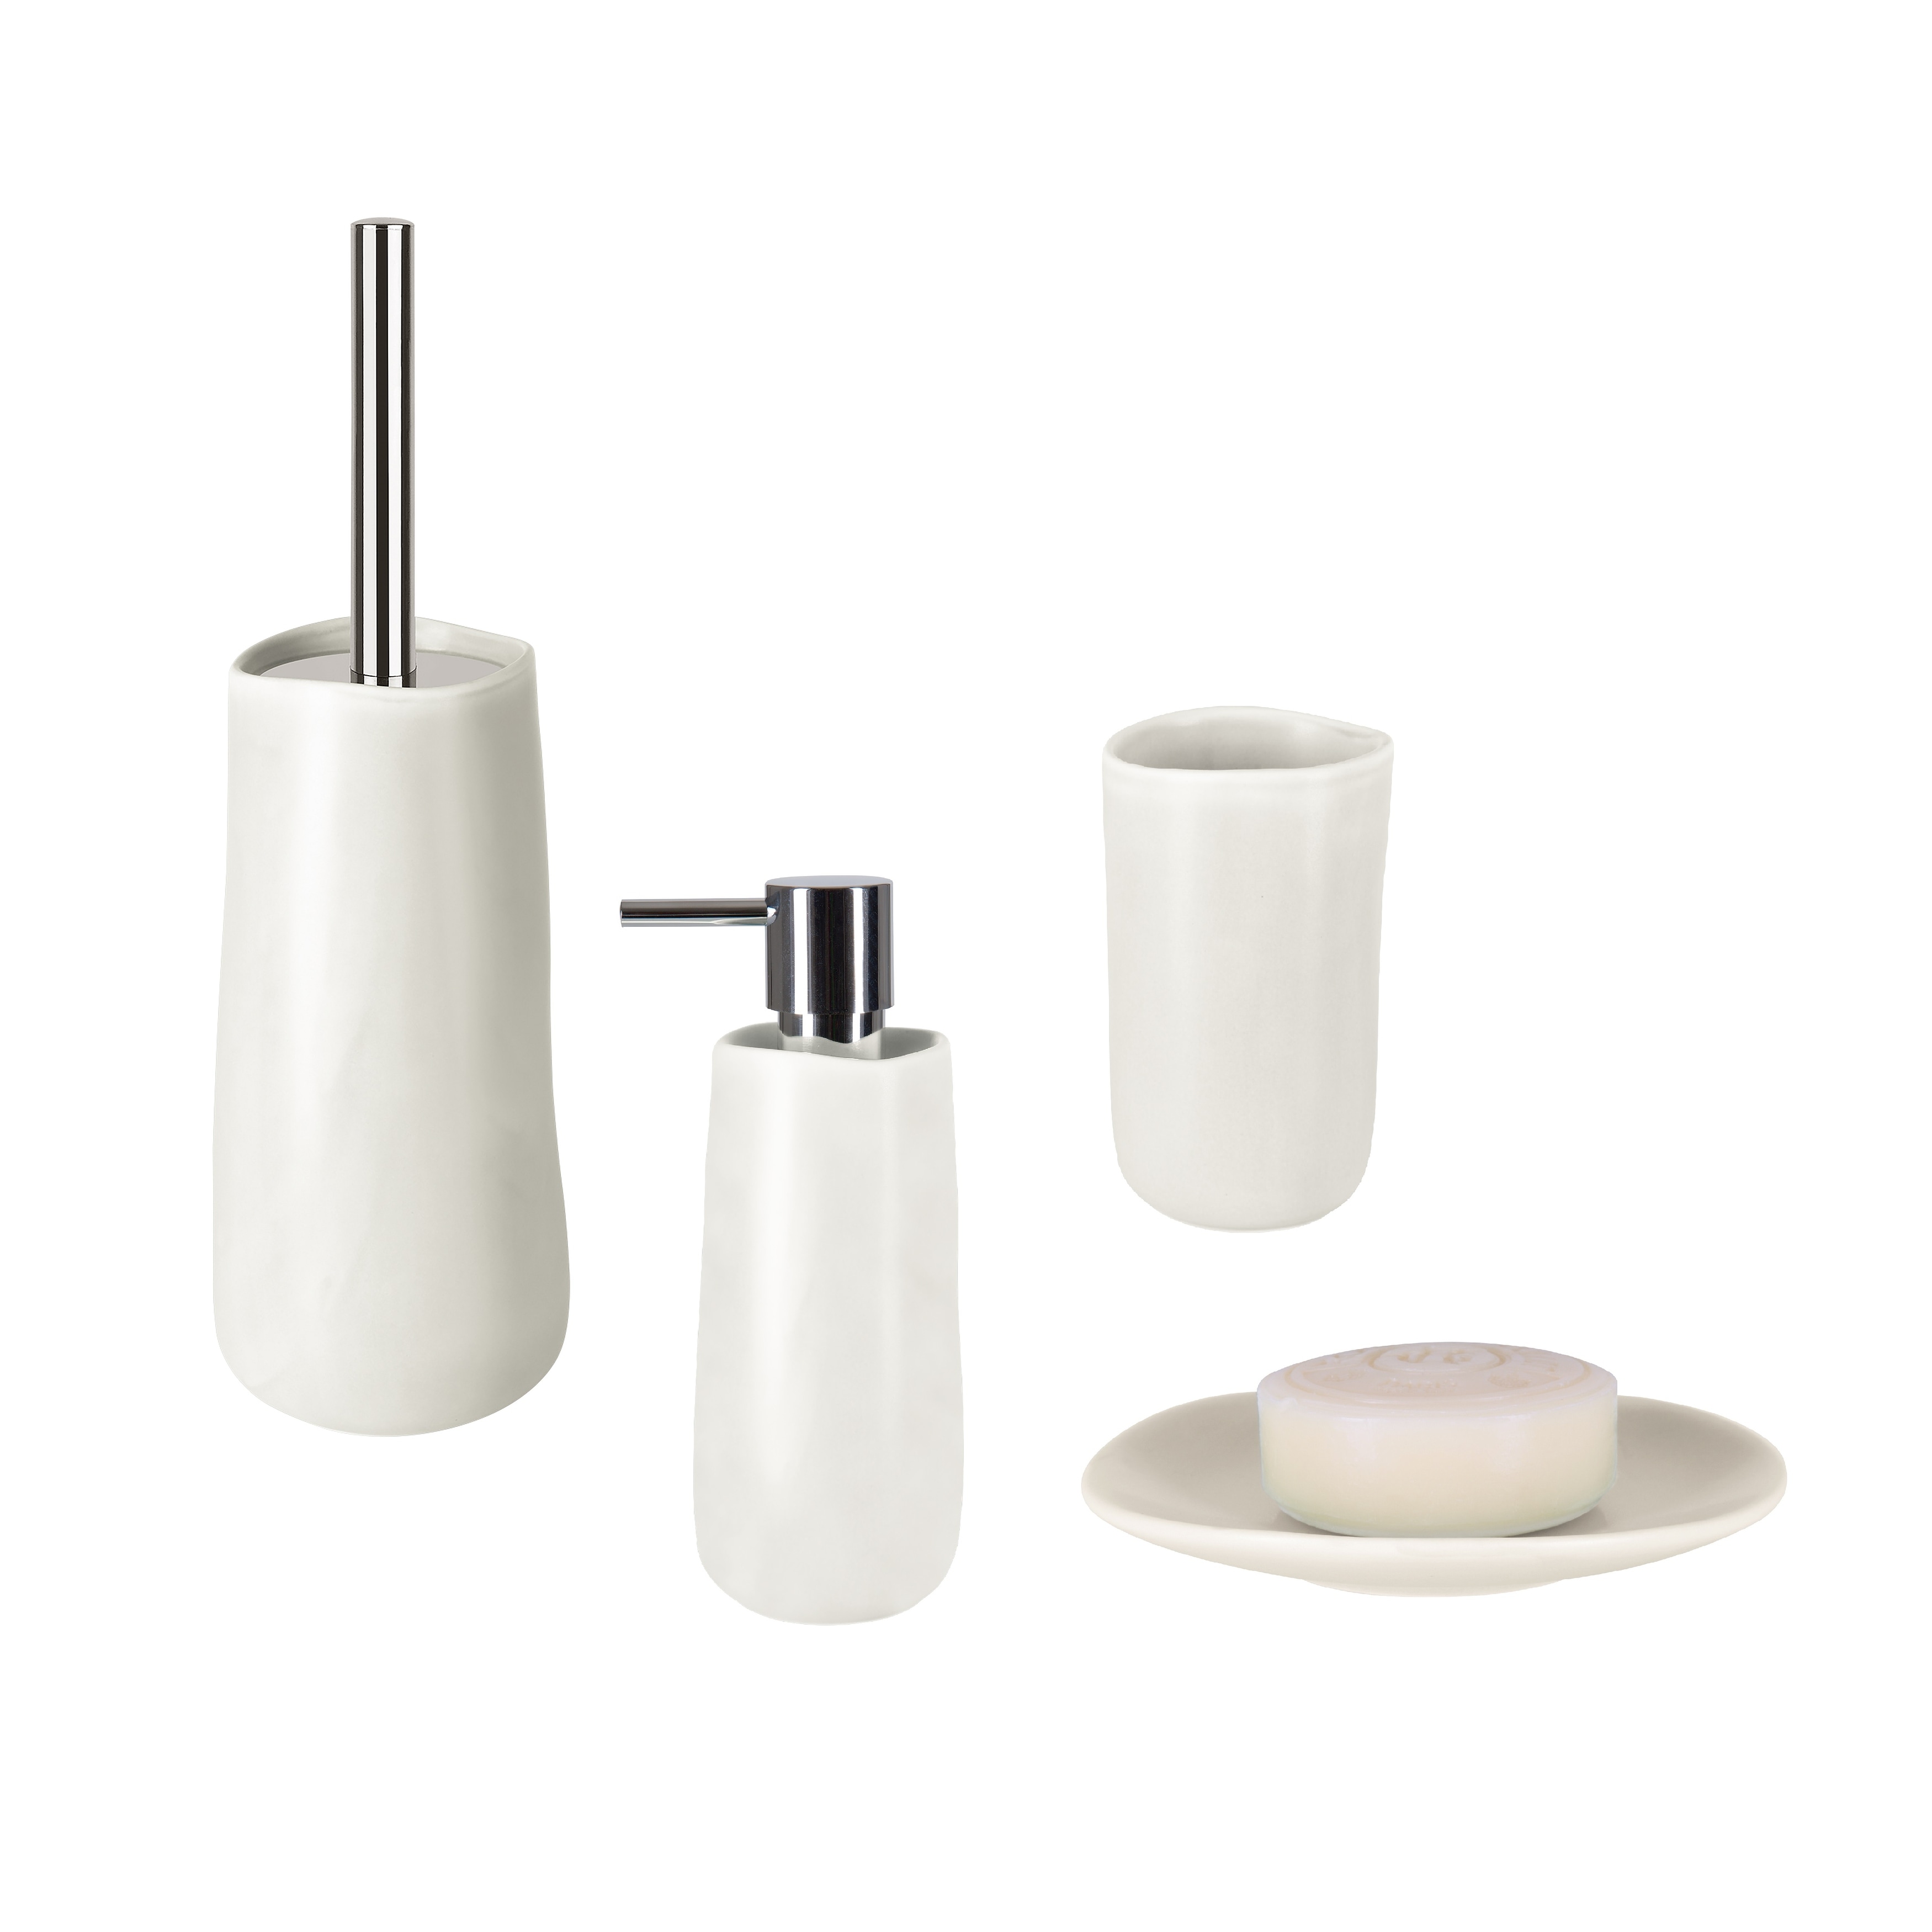 Set 4 Piece Silver & White Damask Ceramic Bathroom Accessories With Chrome Pump 